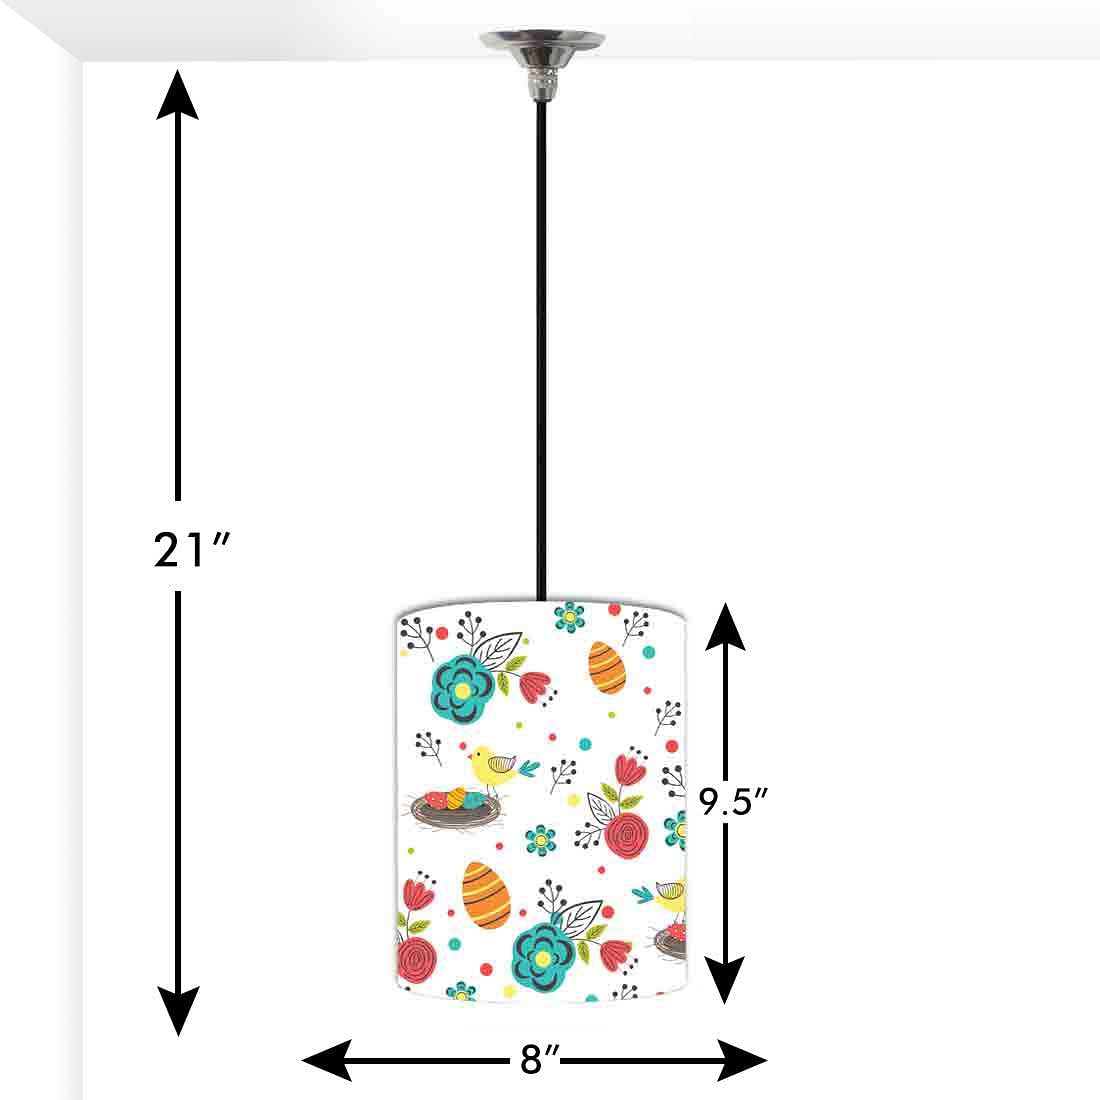 White Pendant Lights Ceiling Lamps - Colorful Eggs - 0243 Nutcase